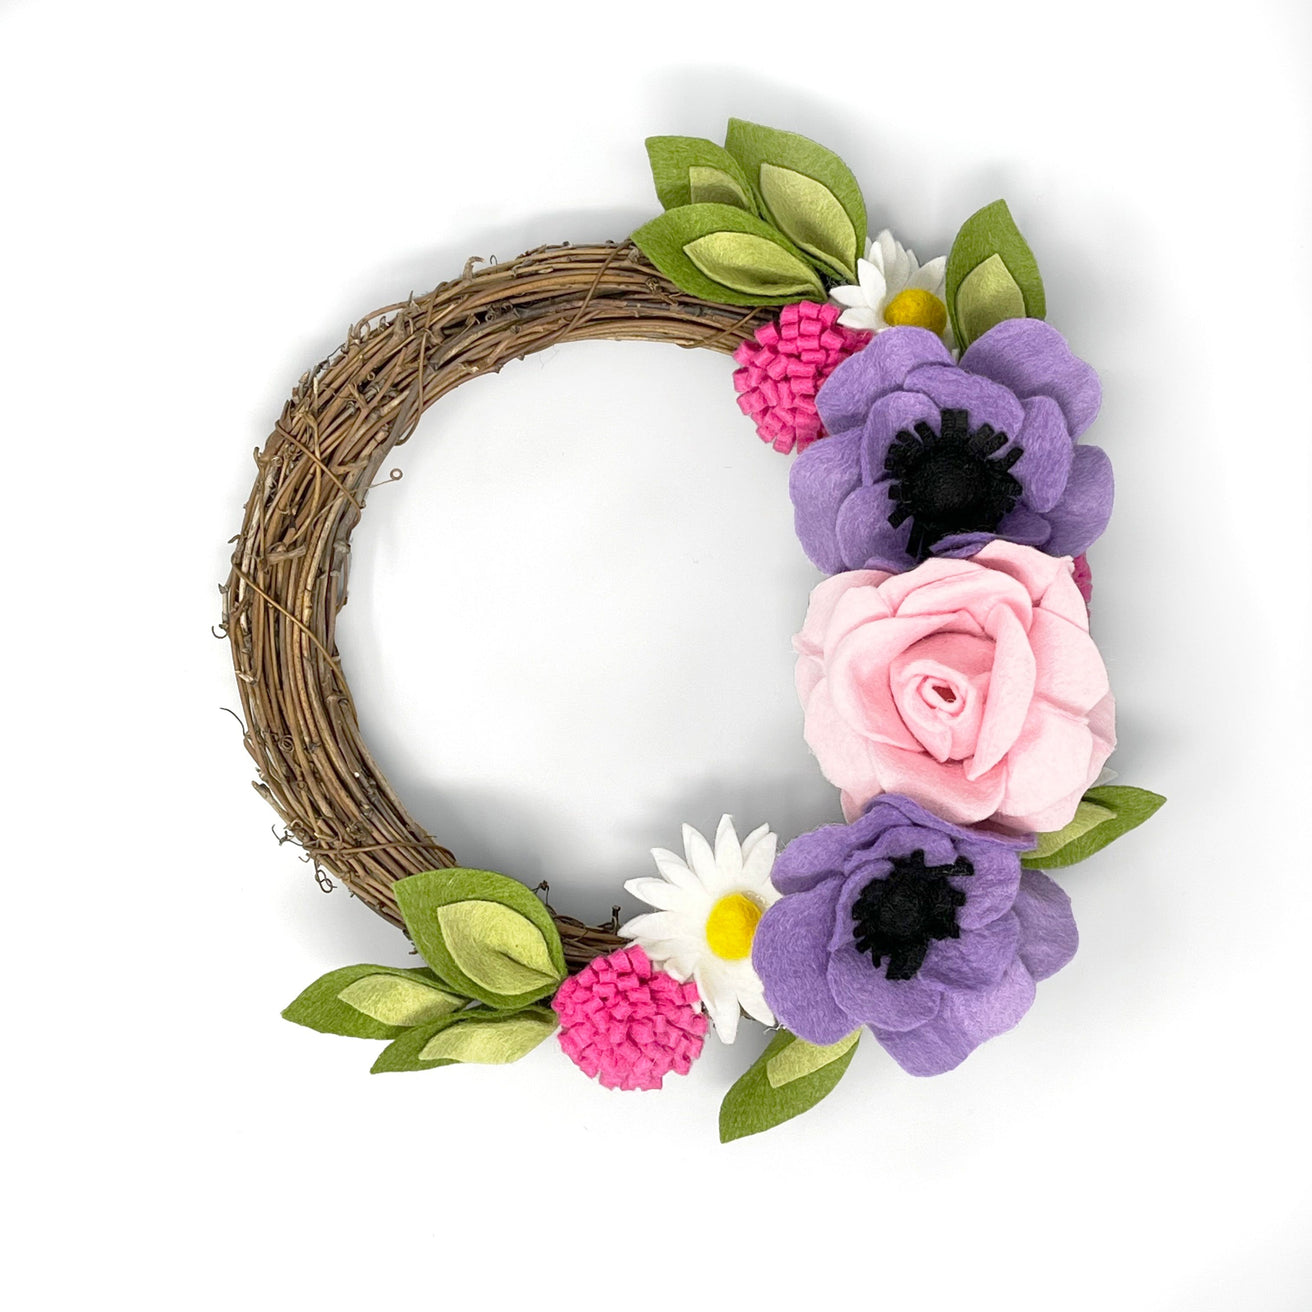 Summer Flowers Felt Wreath Craft Kit - The Crafty Kit Company